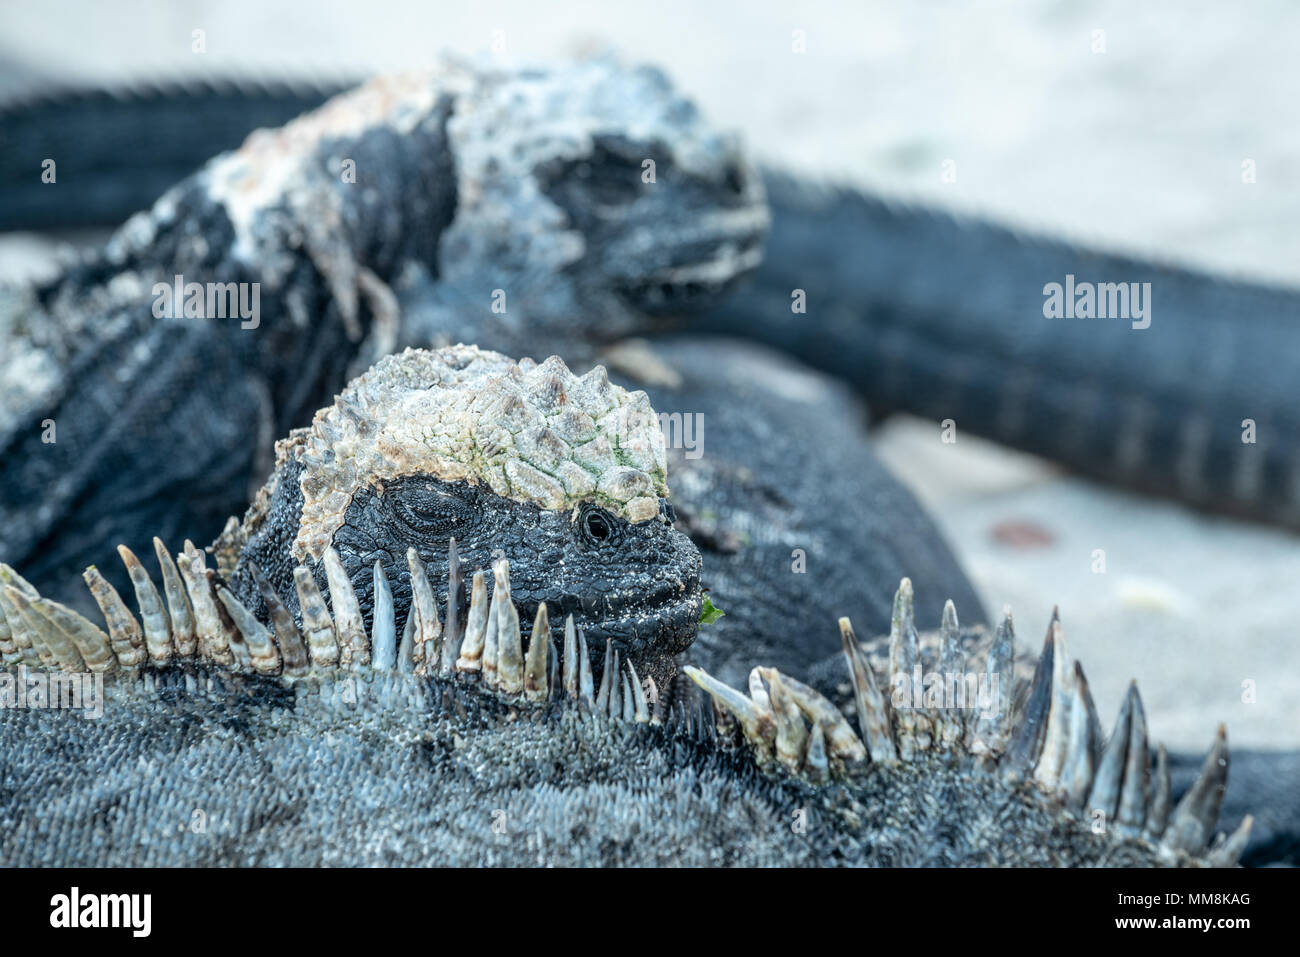 Marine iguanas on a beach in the Galapagos Islands, Ecuador. Stock Photo